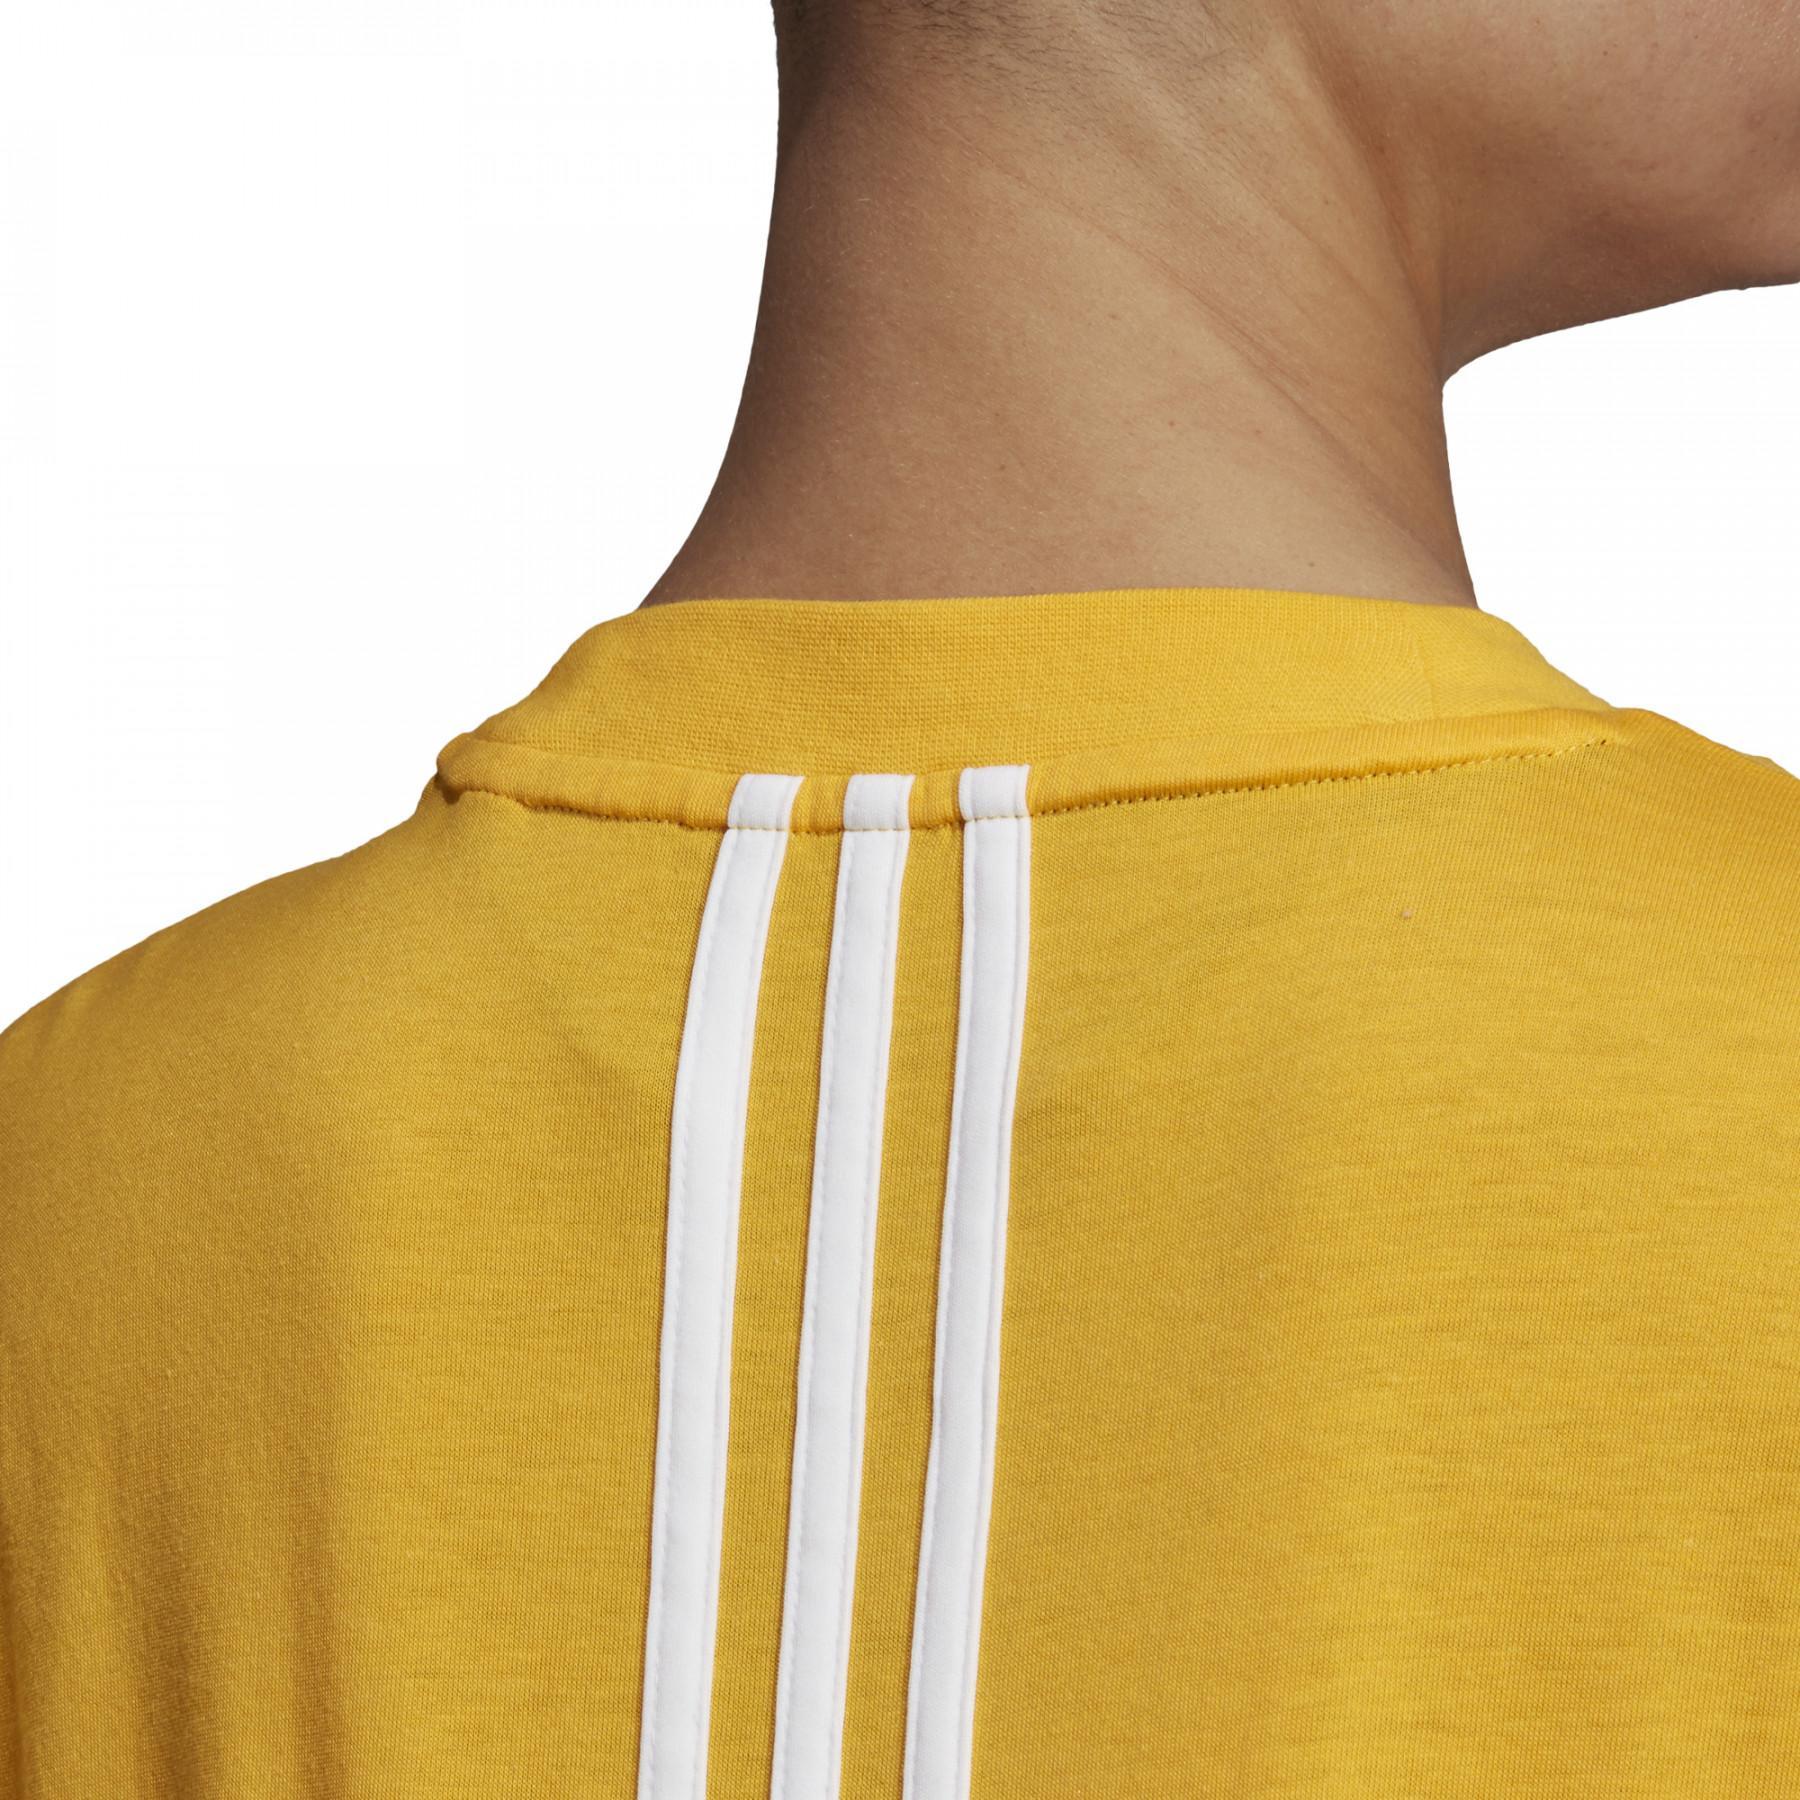 Frauen-T-Shirt adidas Must Haves 3-Stripes